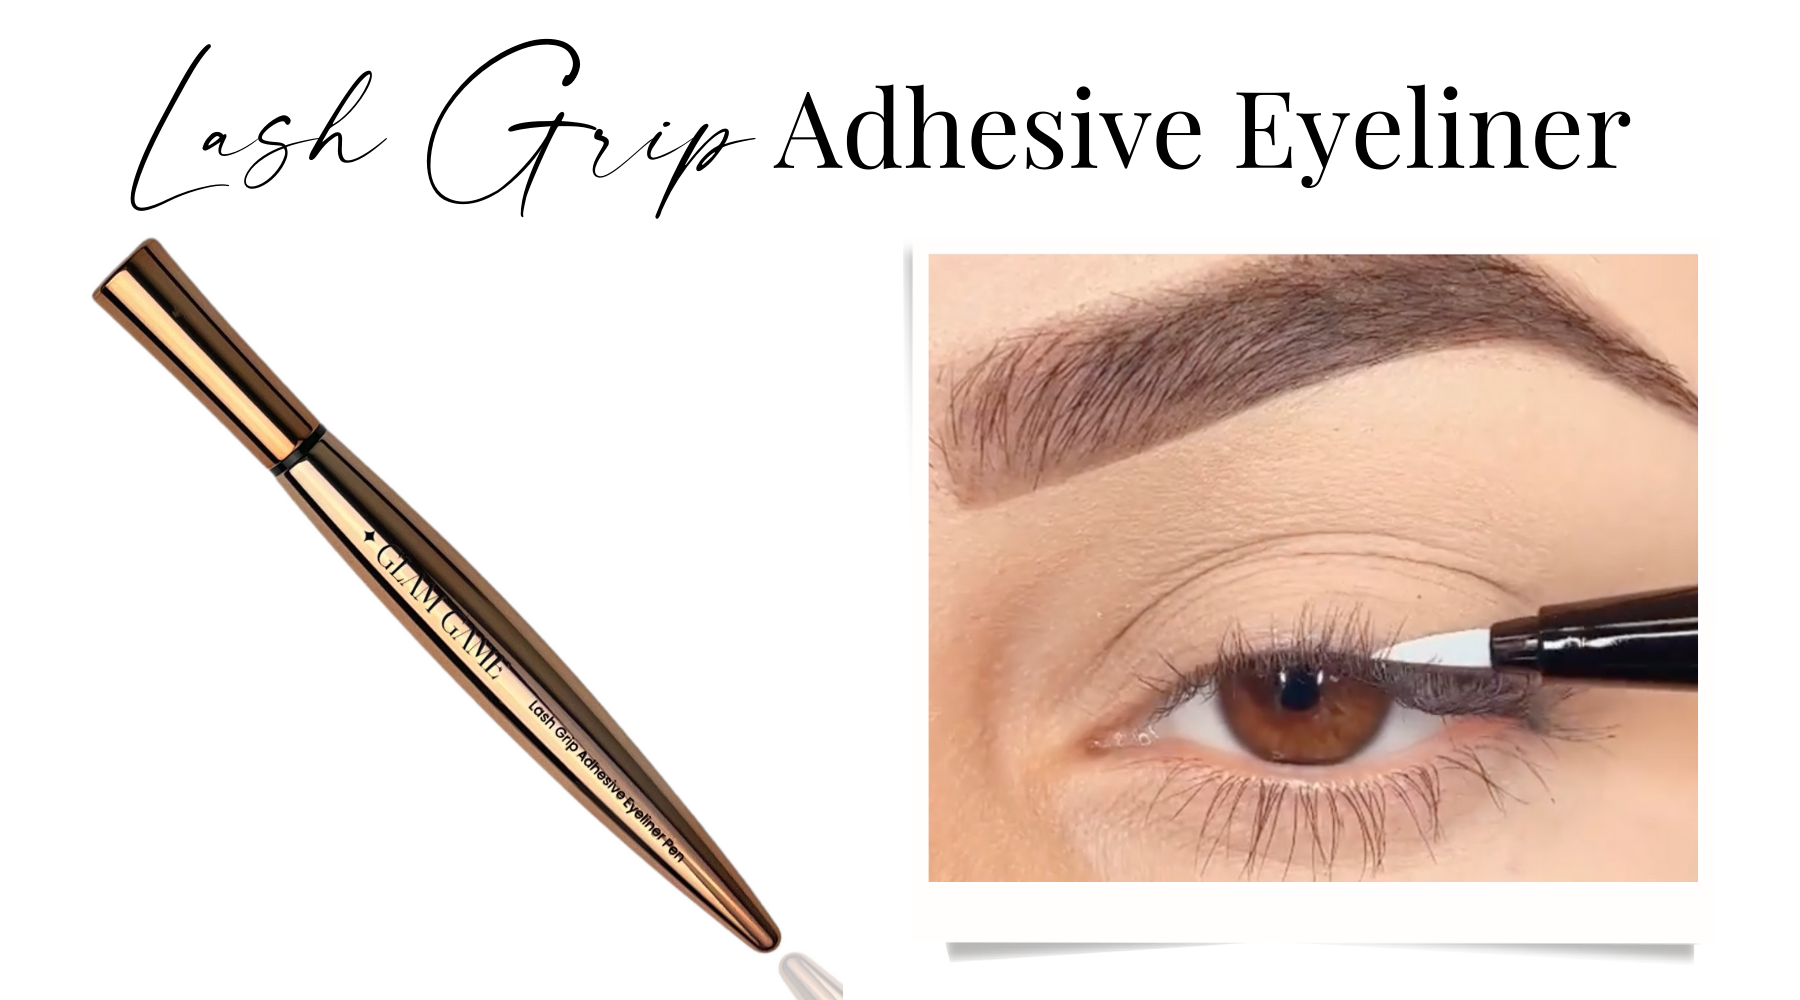 Using Your Lash Grip Adhesive Eyeliner Pen